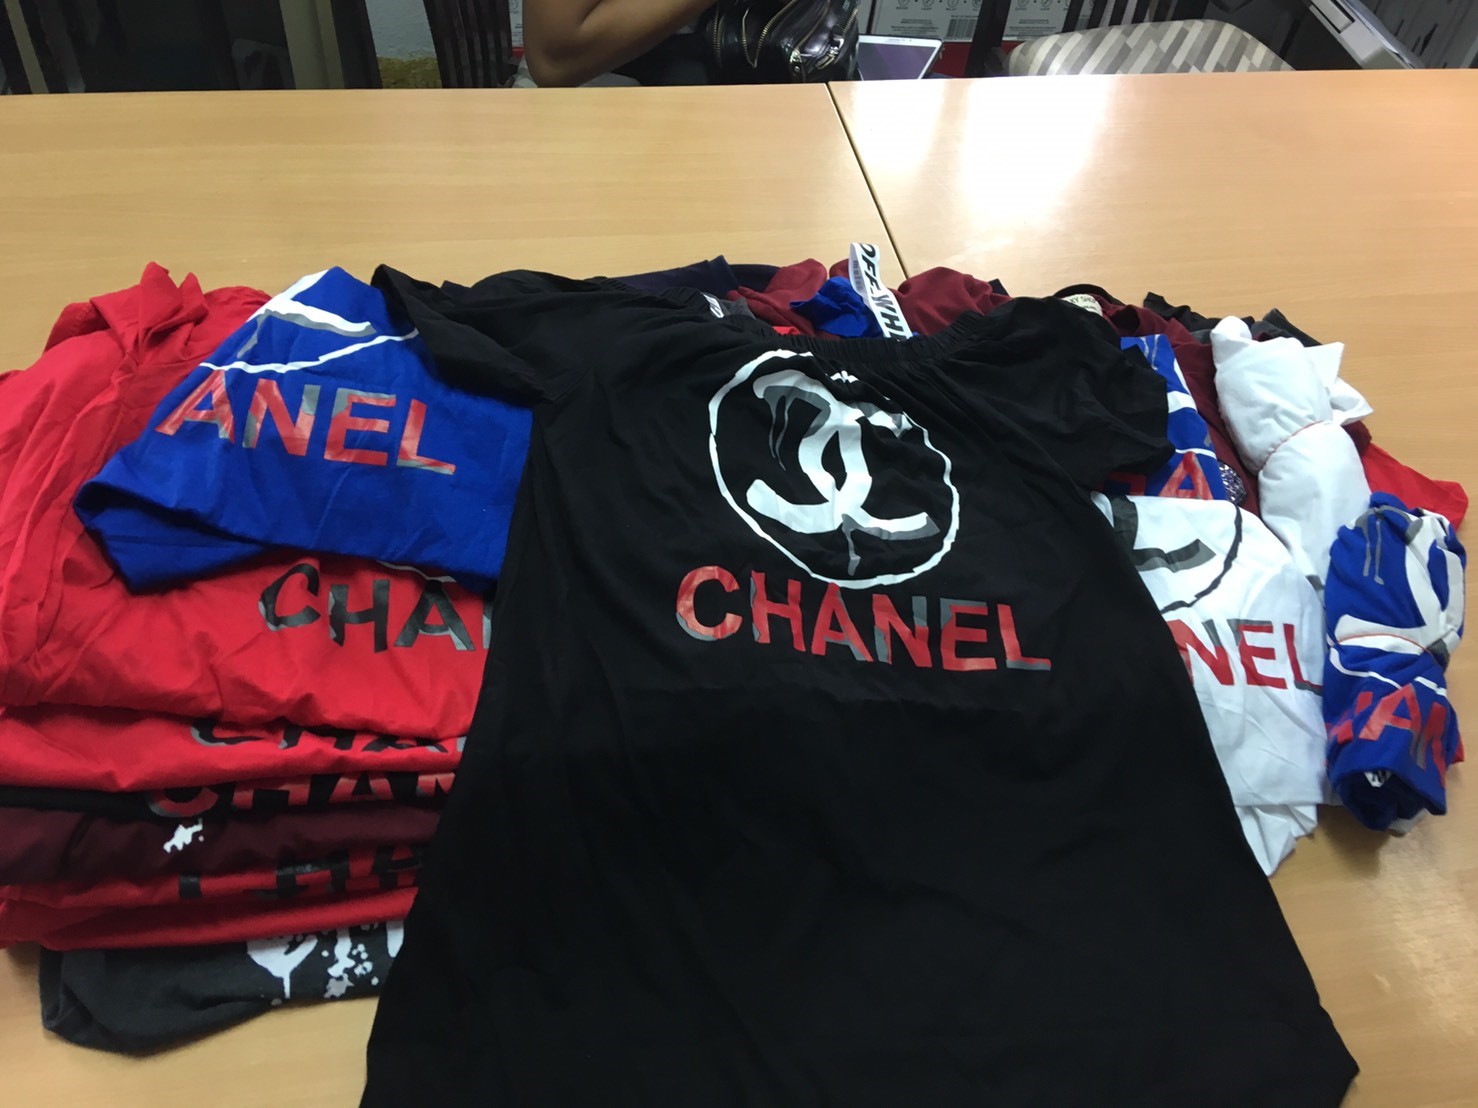 65 Counterfeit Goods seized in Bangkok Metropolitan Area